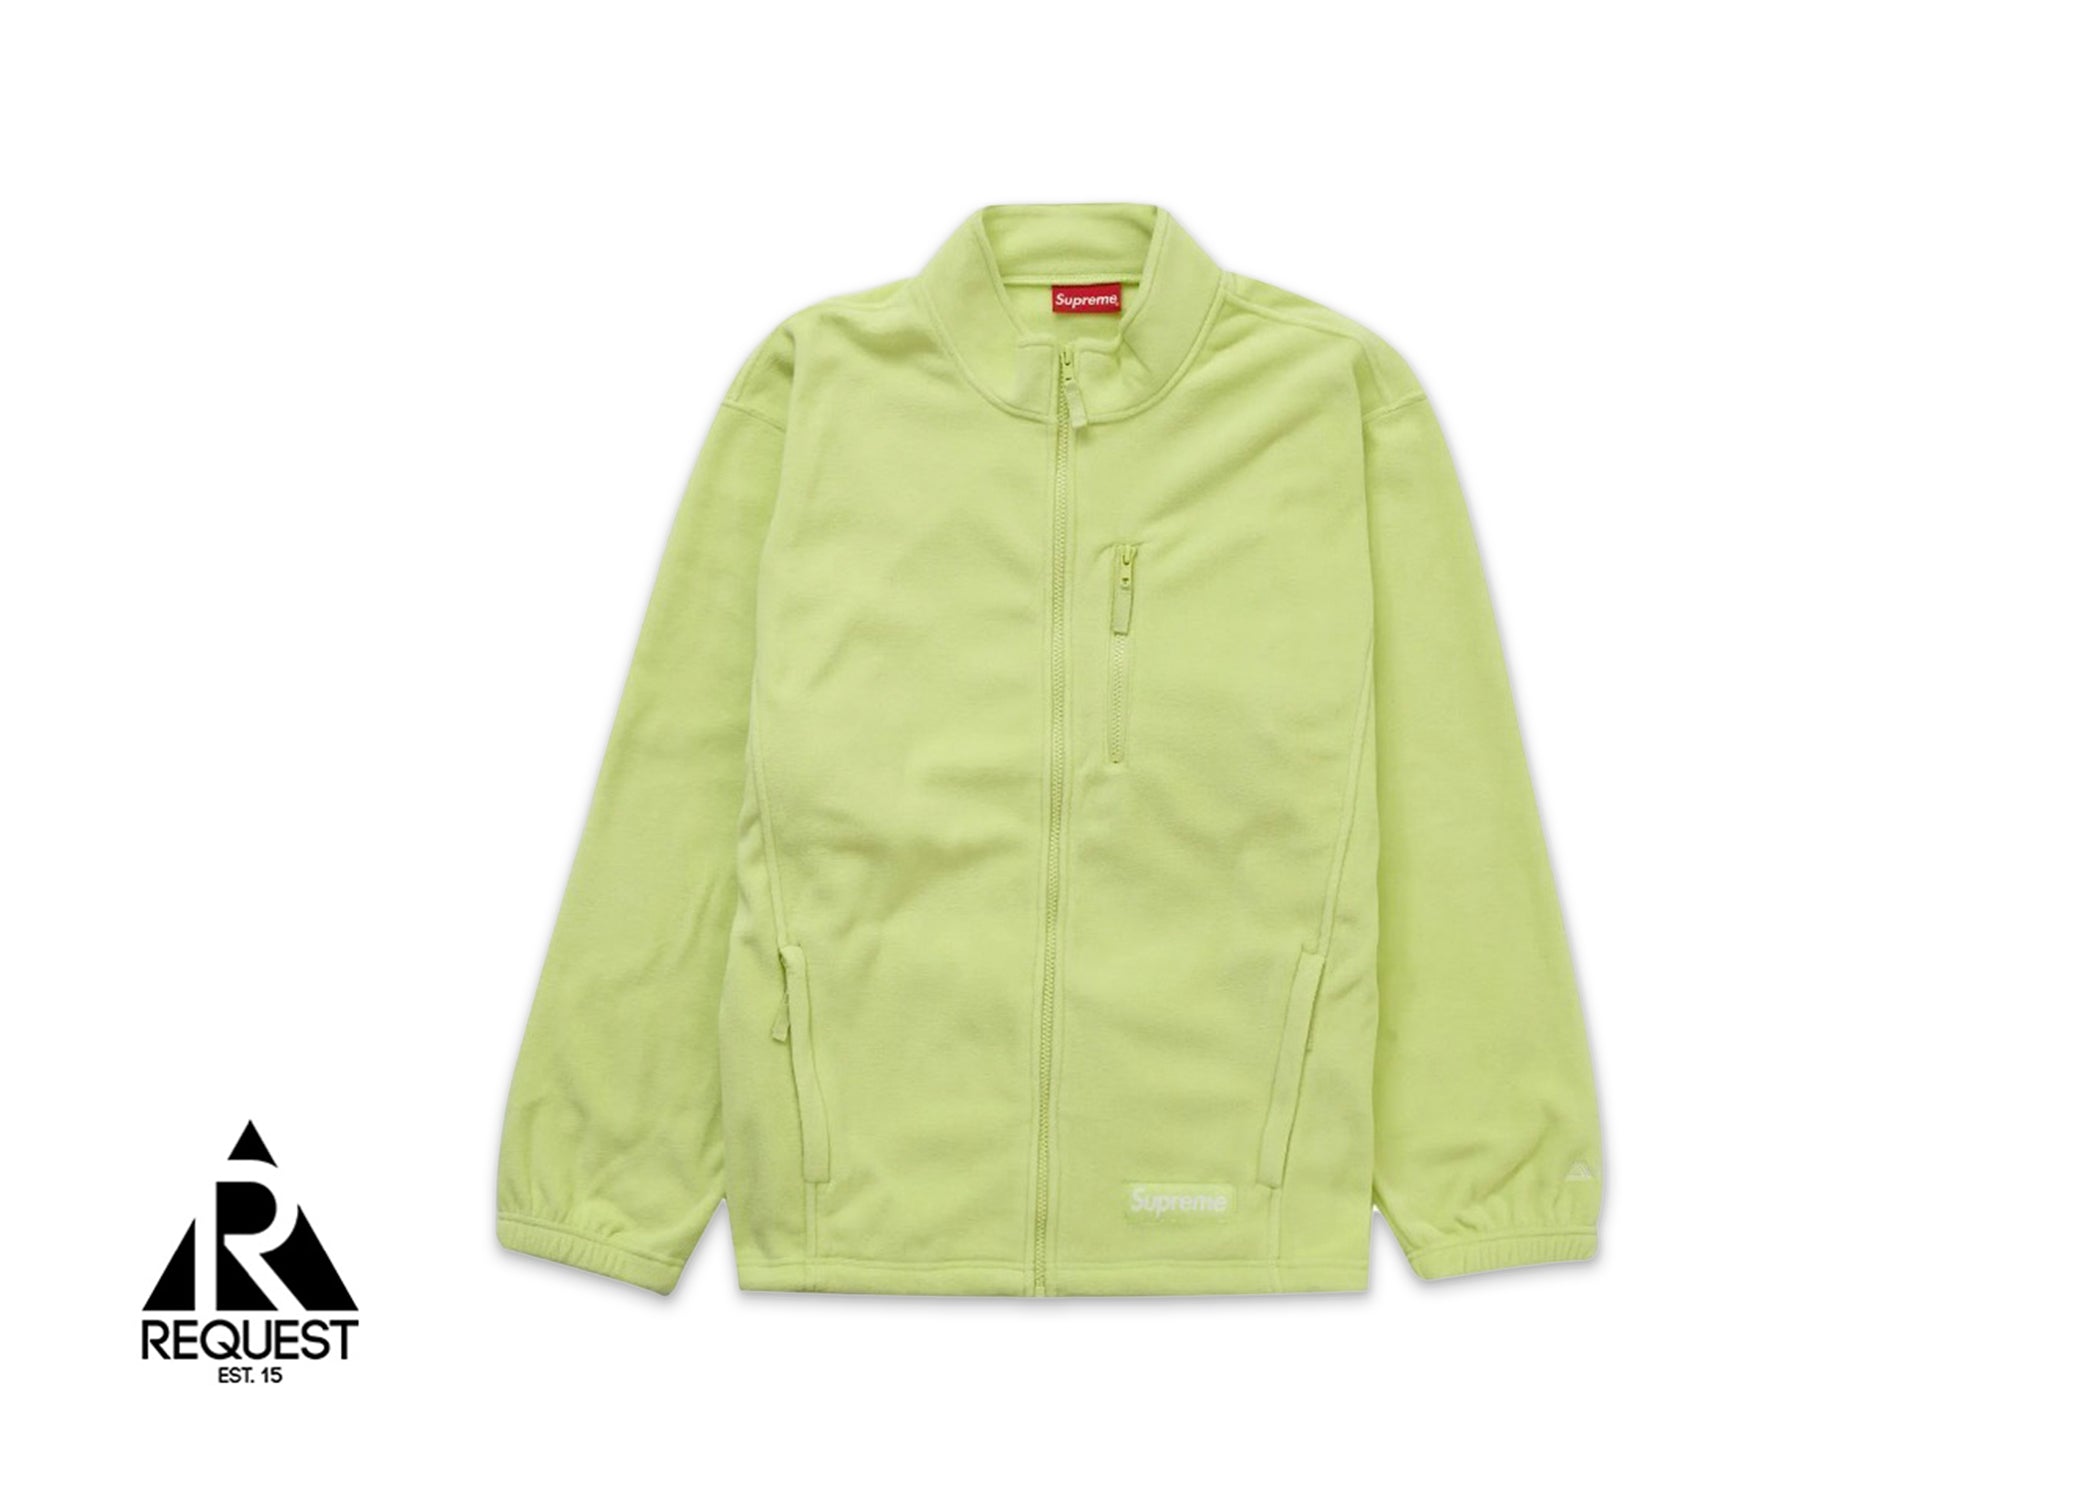 Supreme Polartec Zip Jacket “Lime”